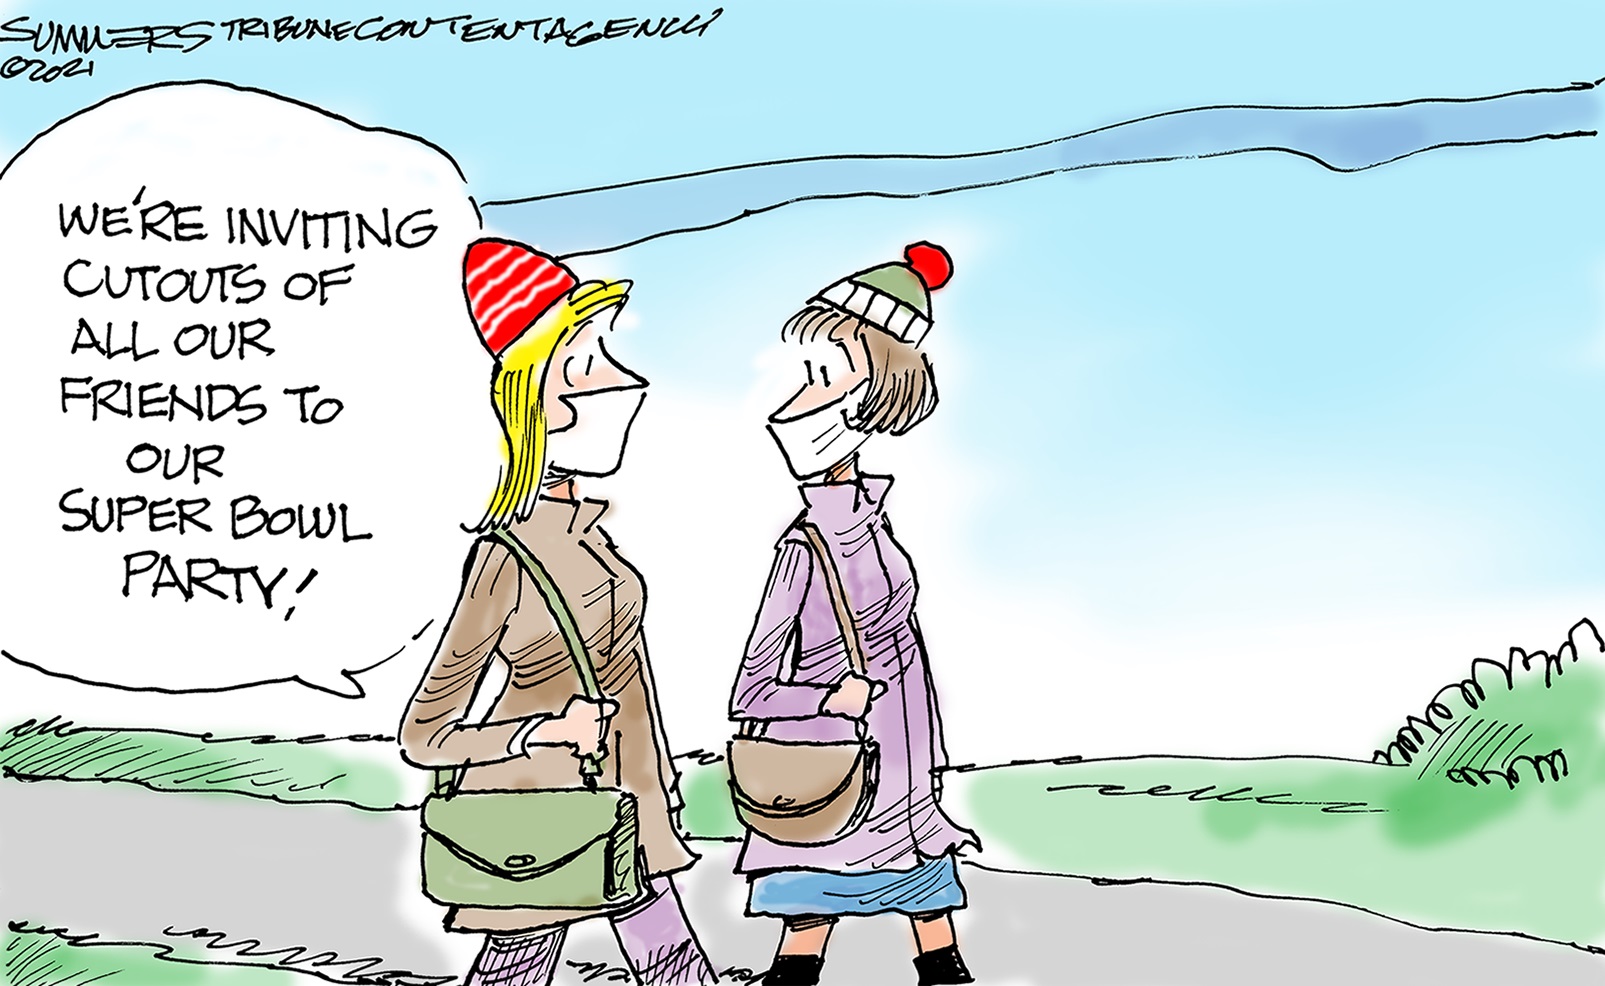 Editorial cartoon: Dana Summers on summer 2021